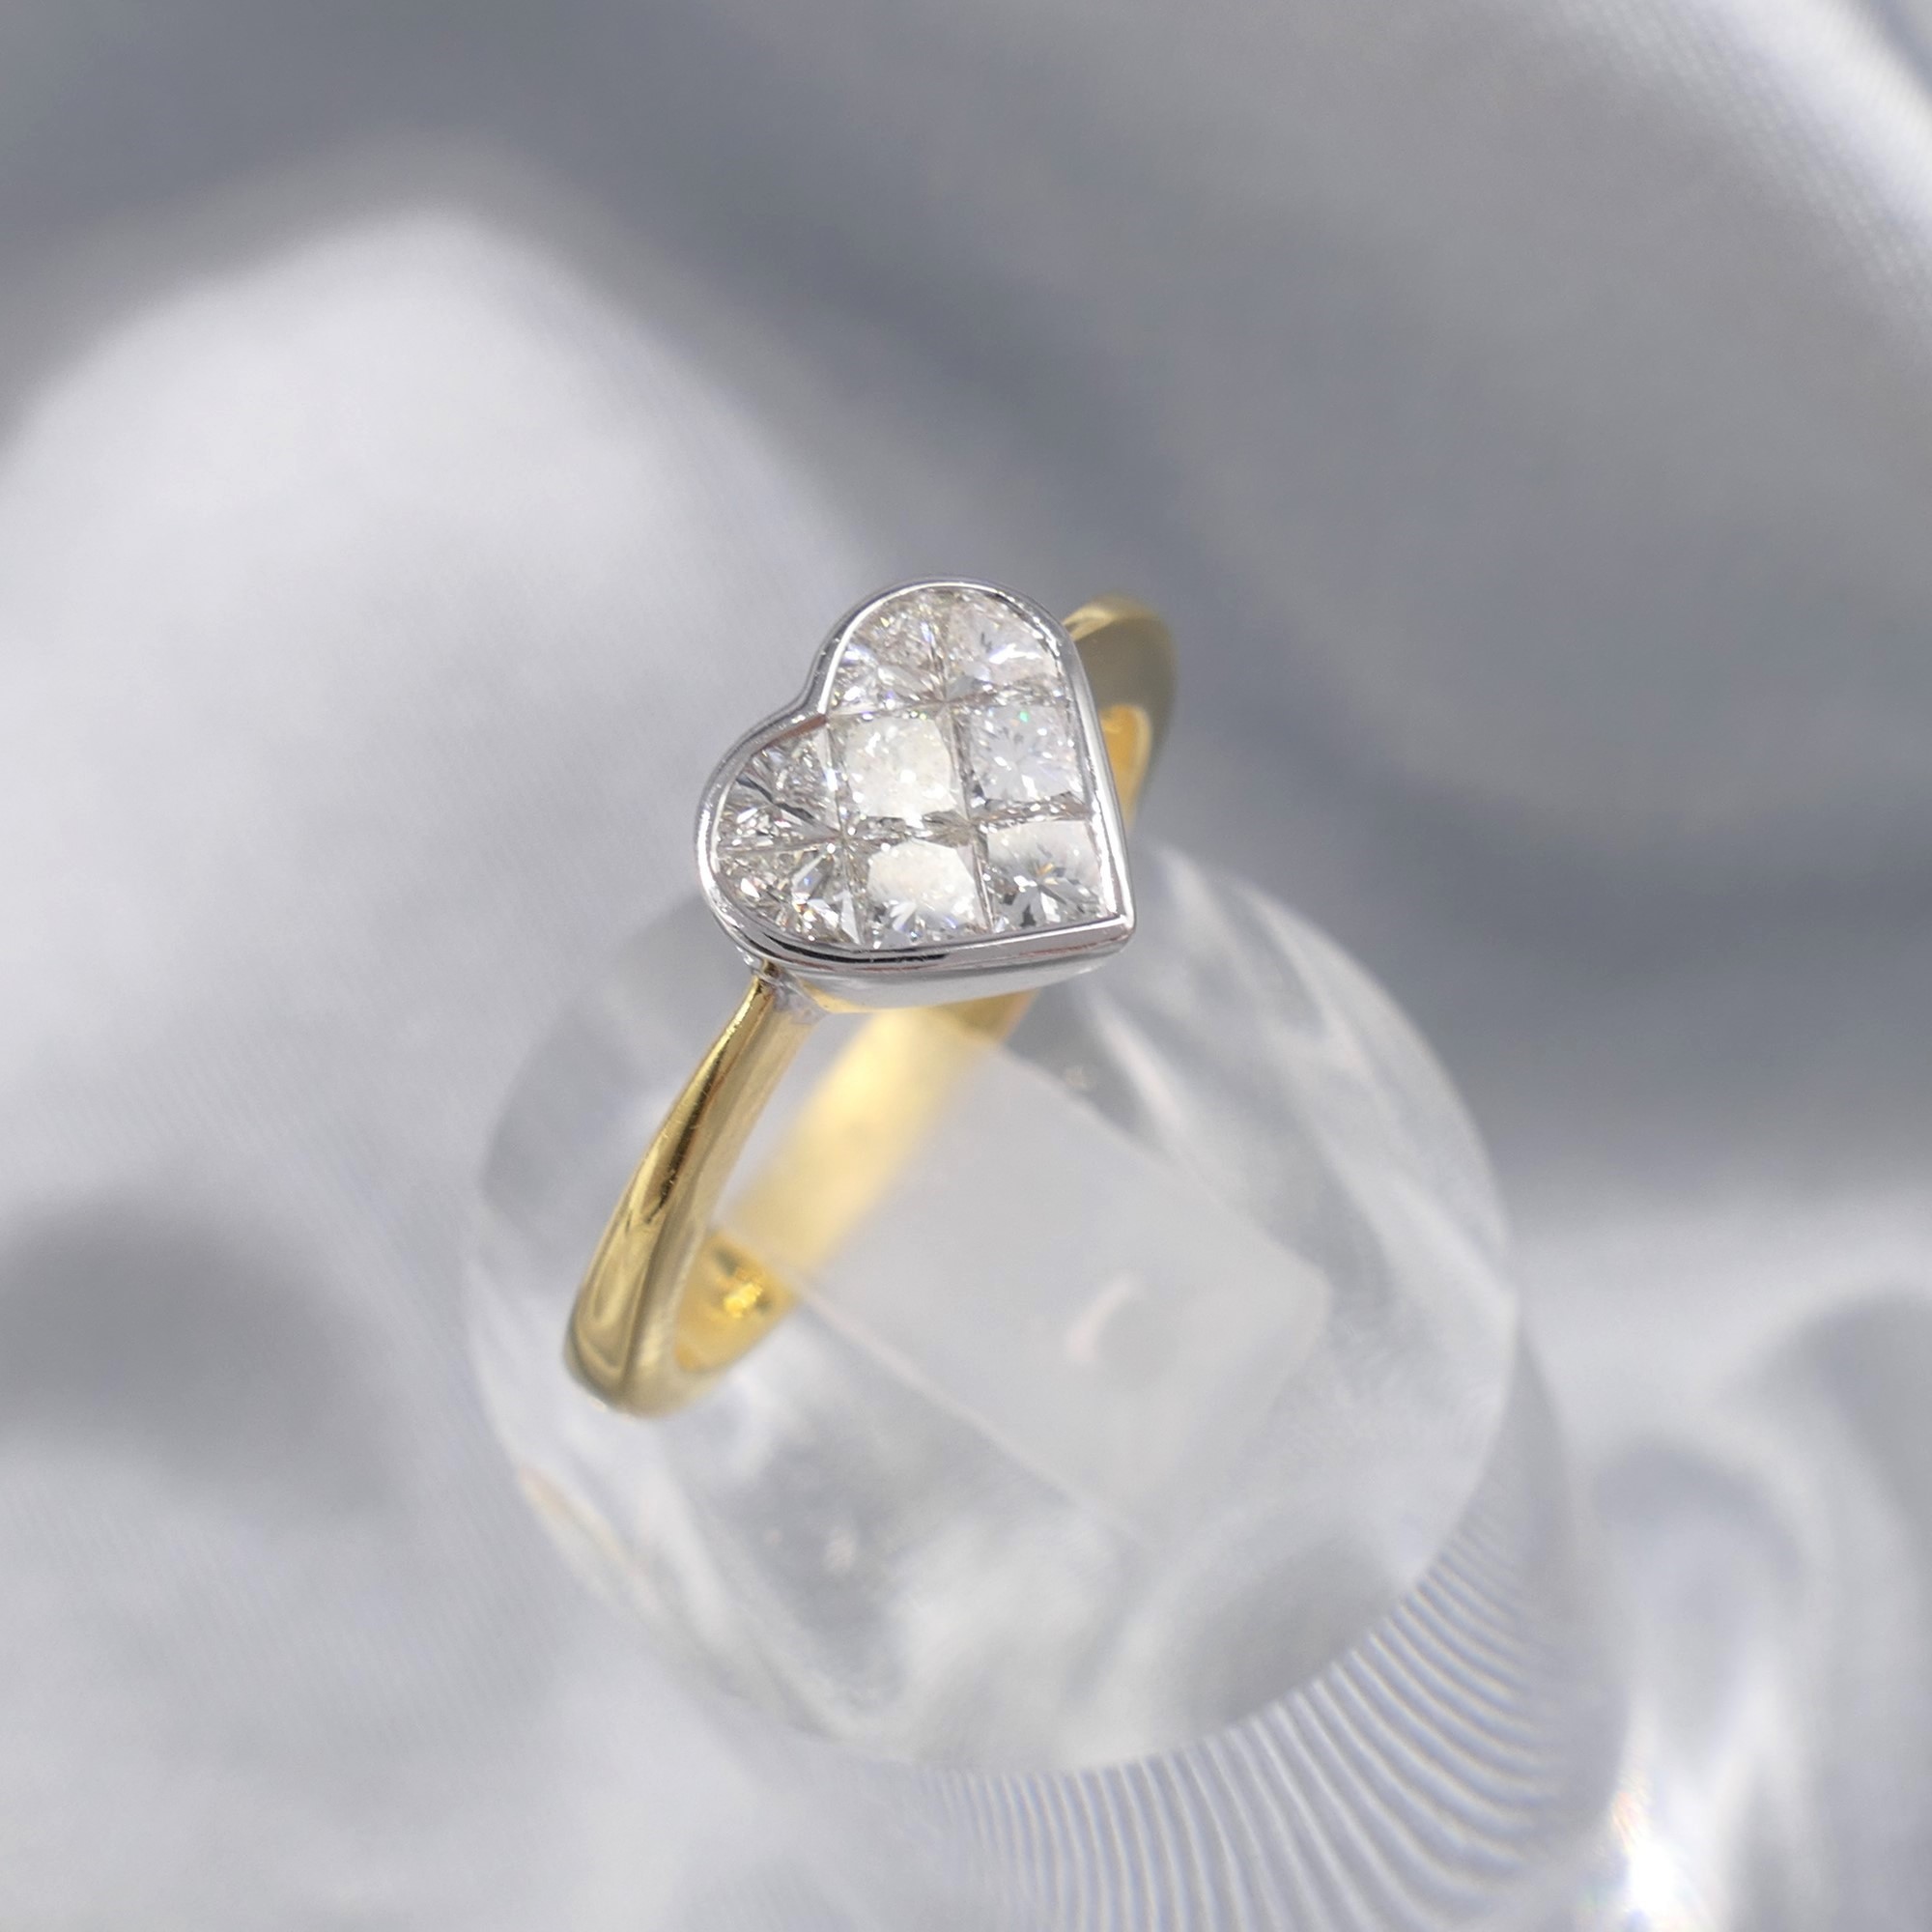 18ct Yellow Gold 0.75 Carat Heart-Shaped Princess-Cut Diamond Ring - Image 4 of 7